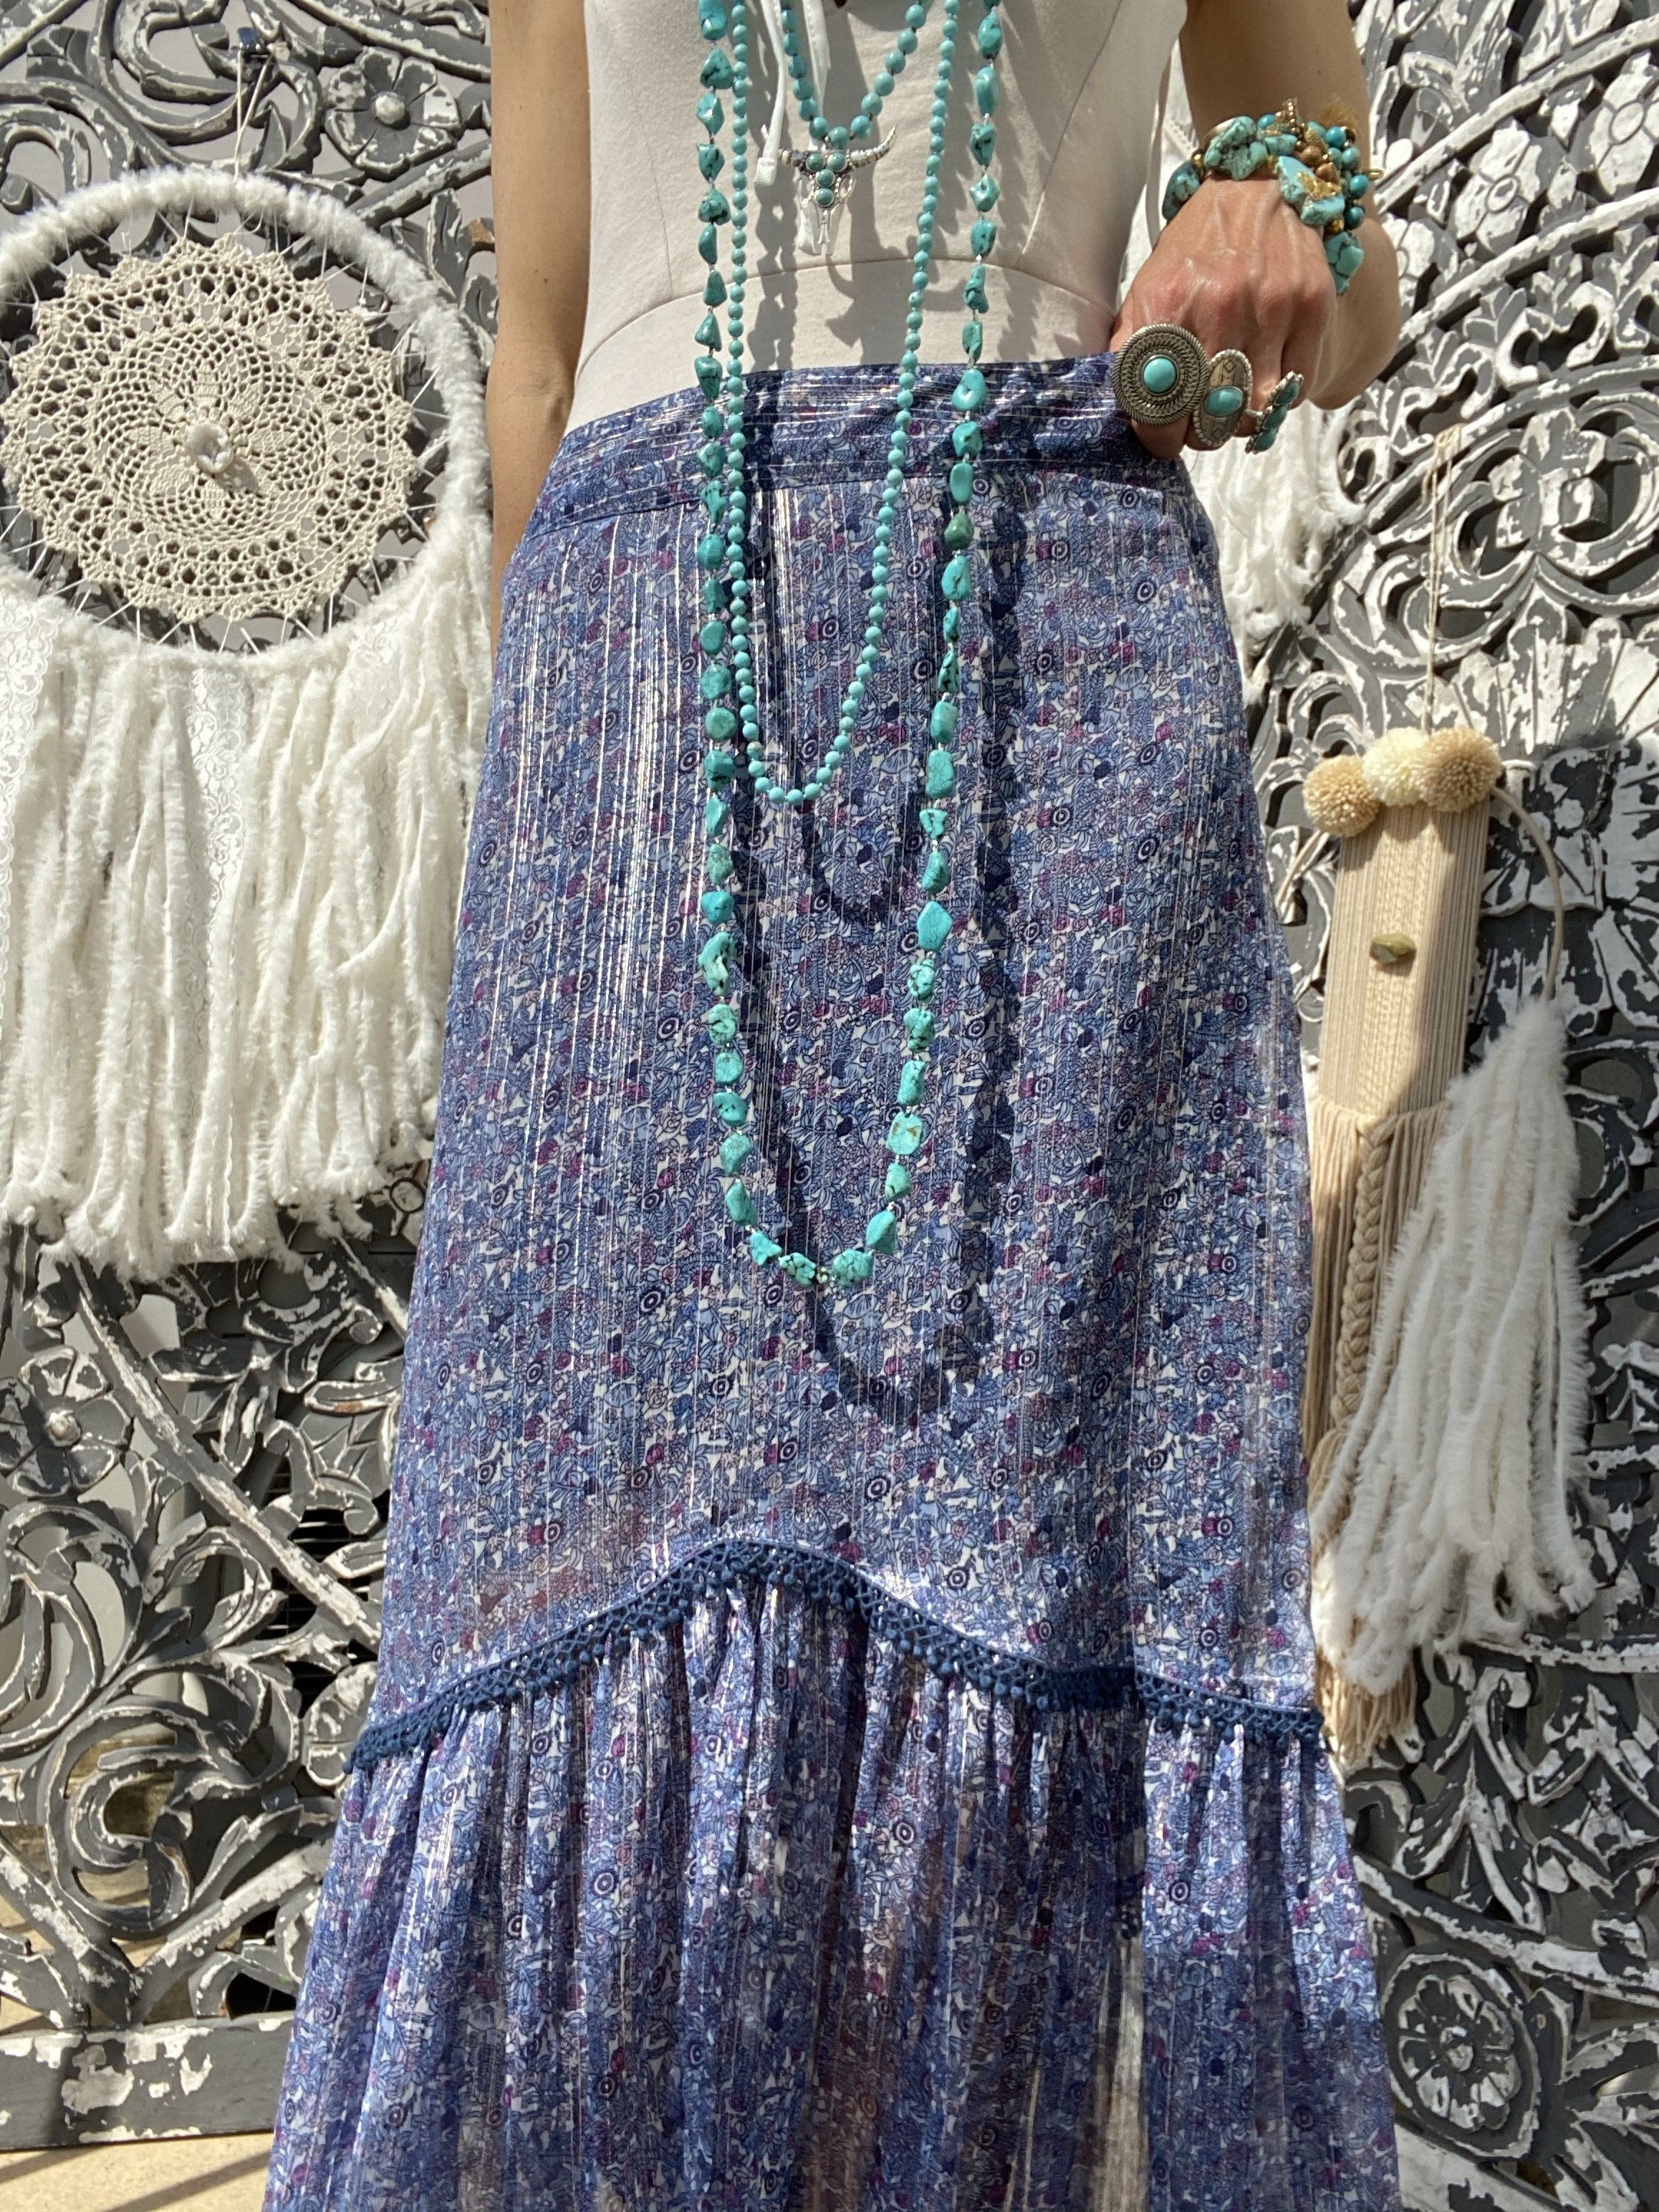 Mira Blue Wild long skirt by Amenapih